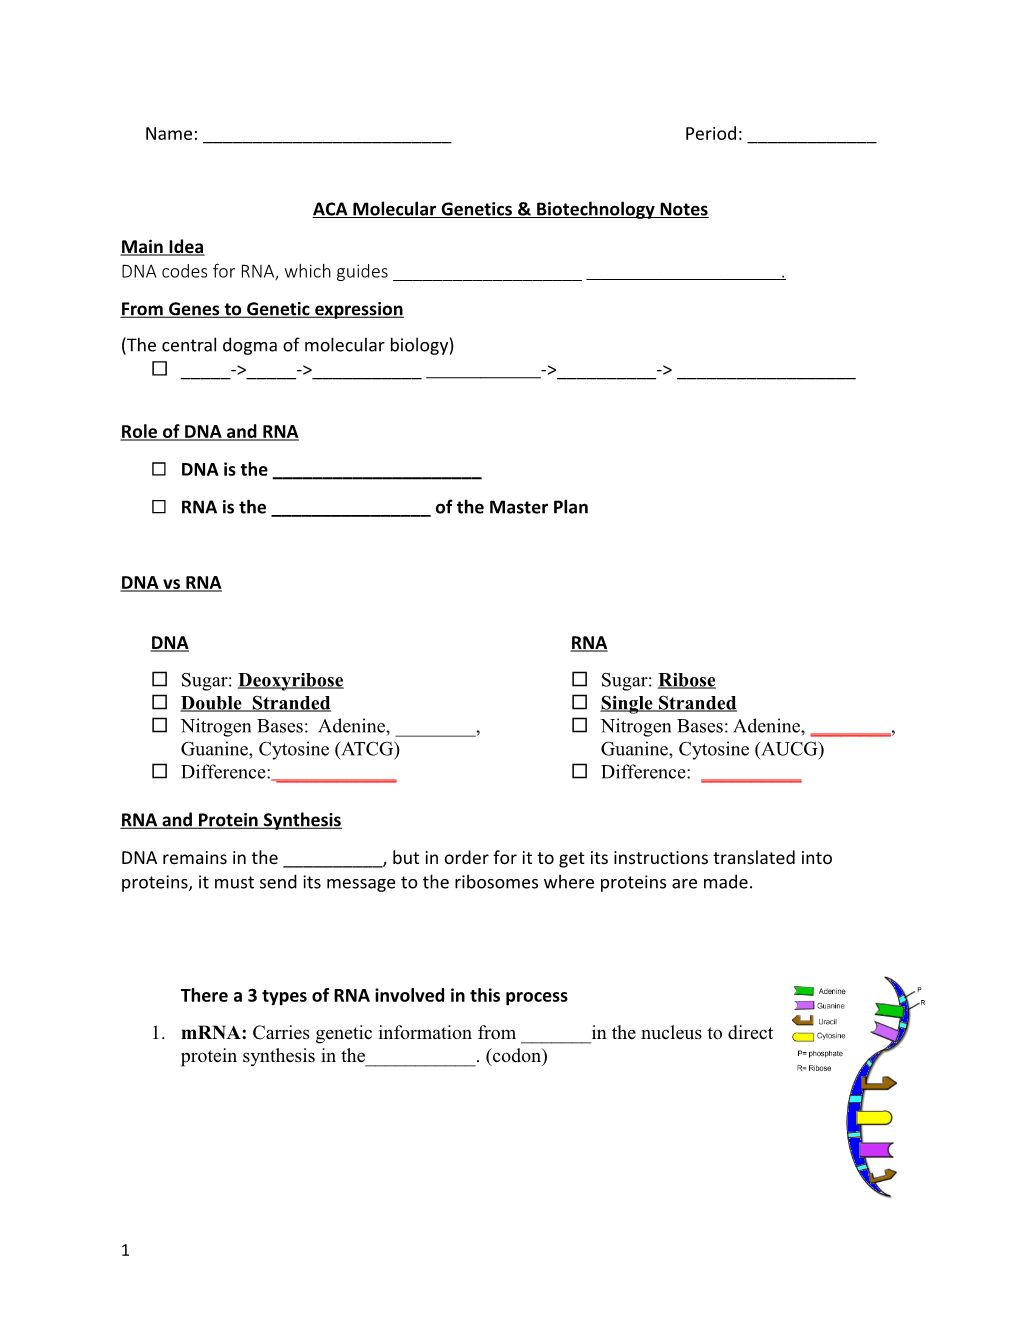 ACA Molecular Genetics & Biotechnology Notes